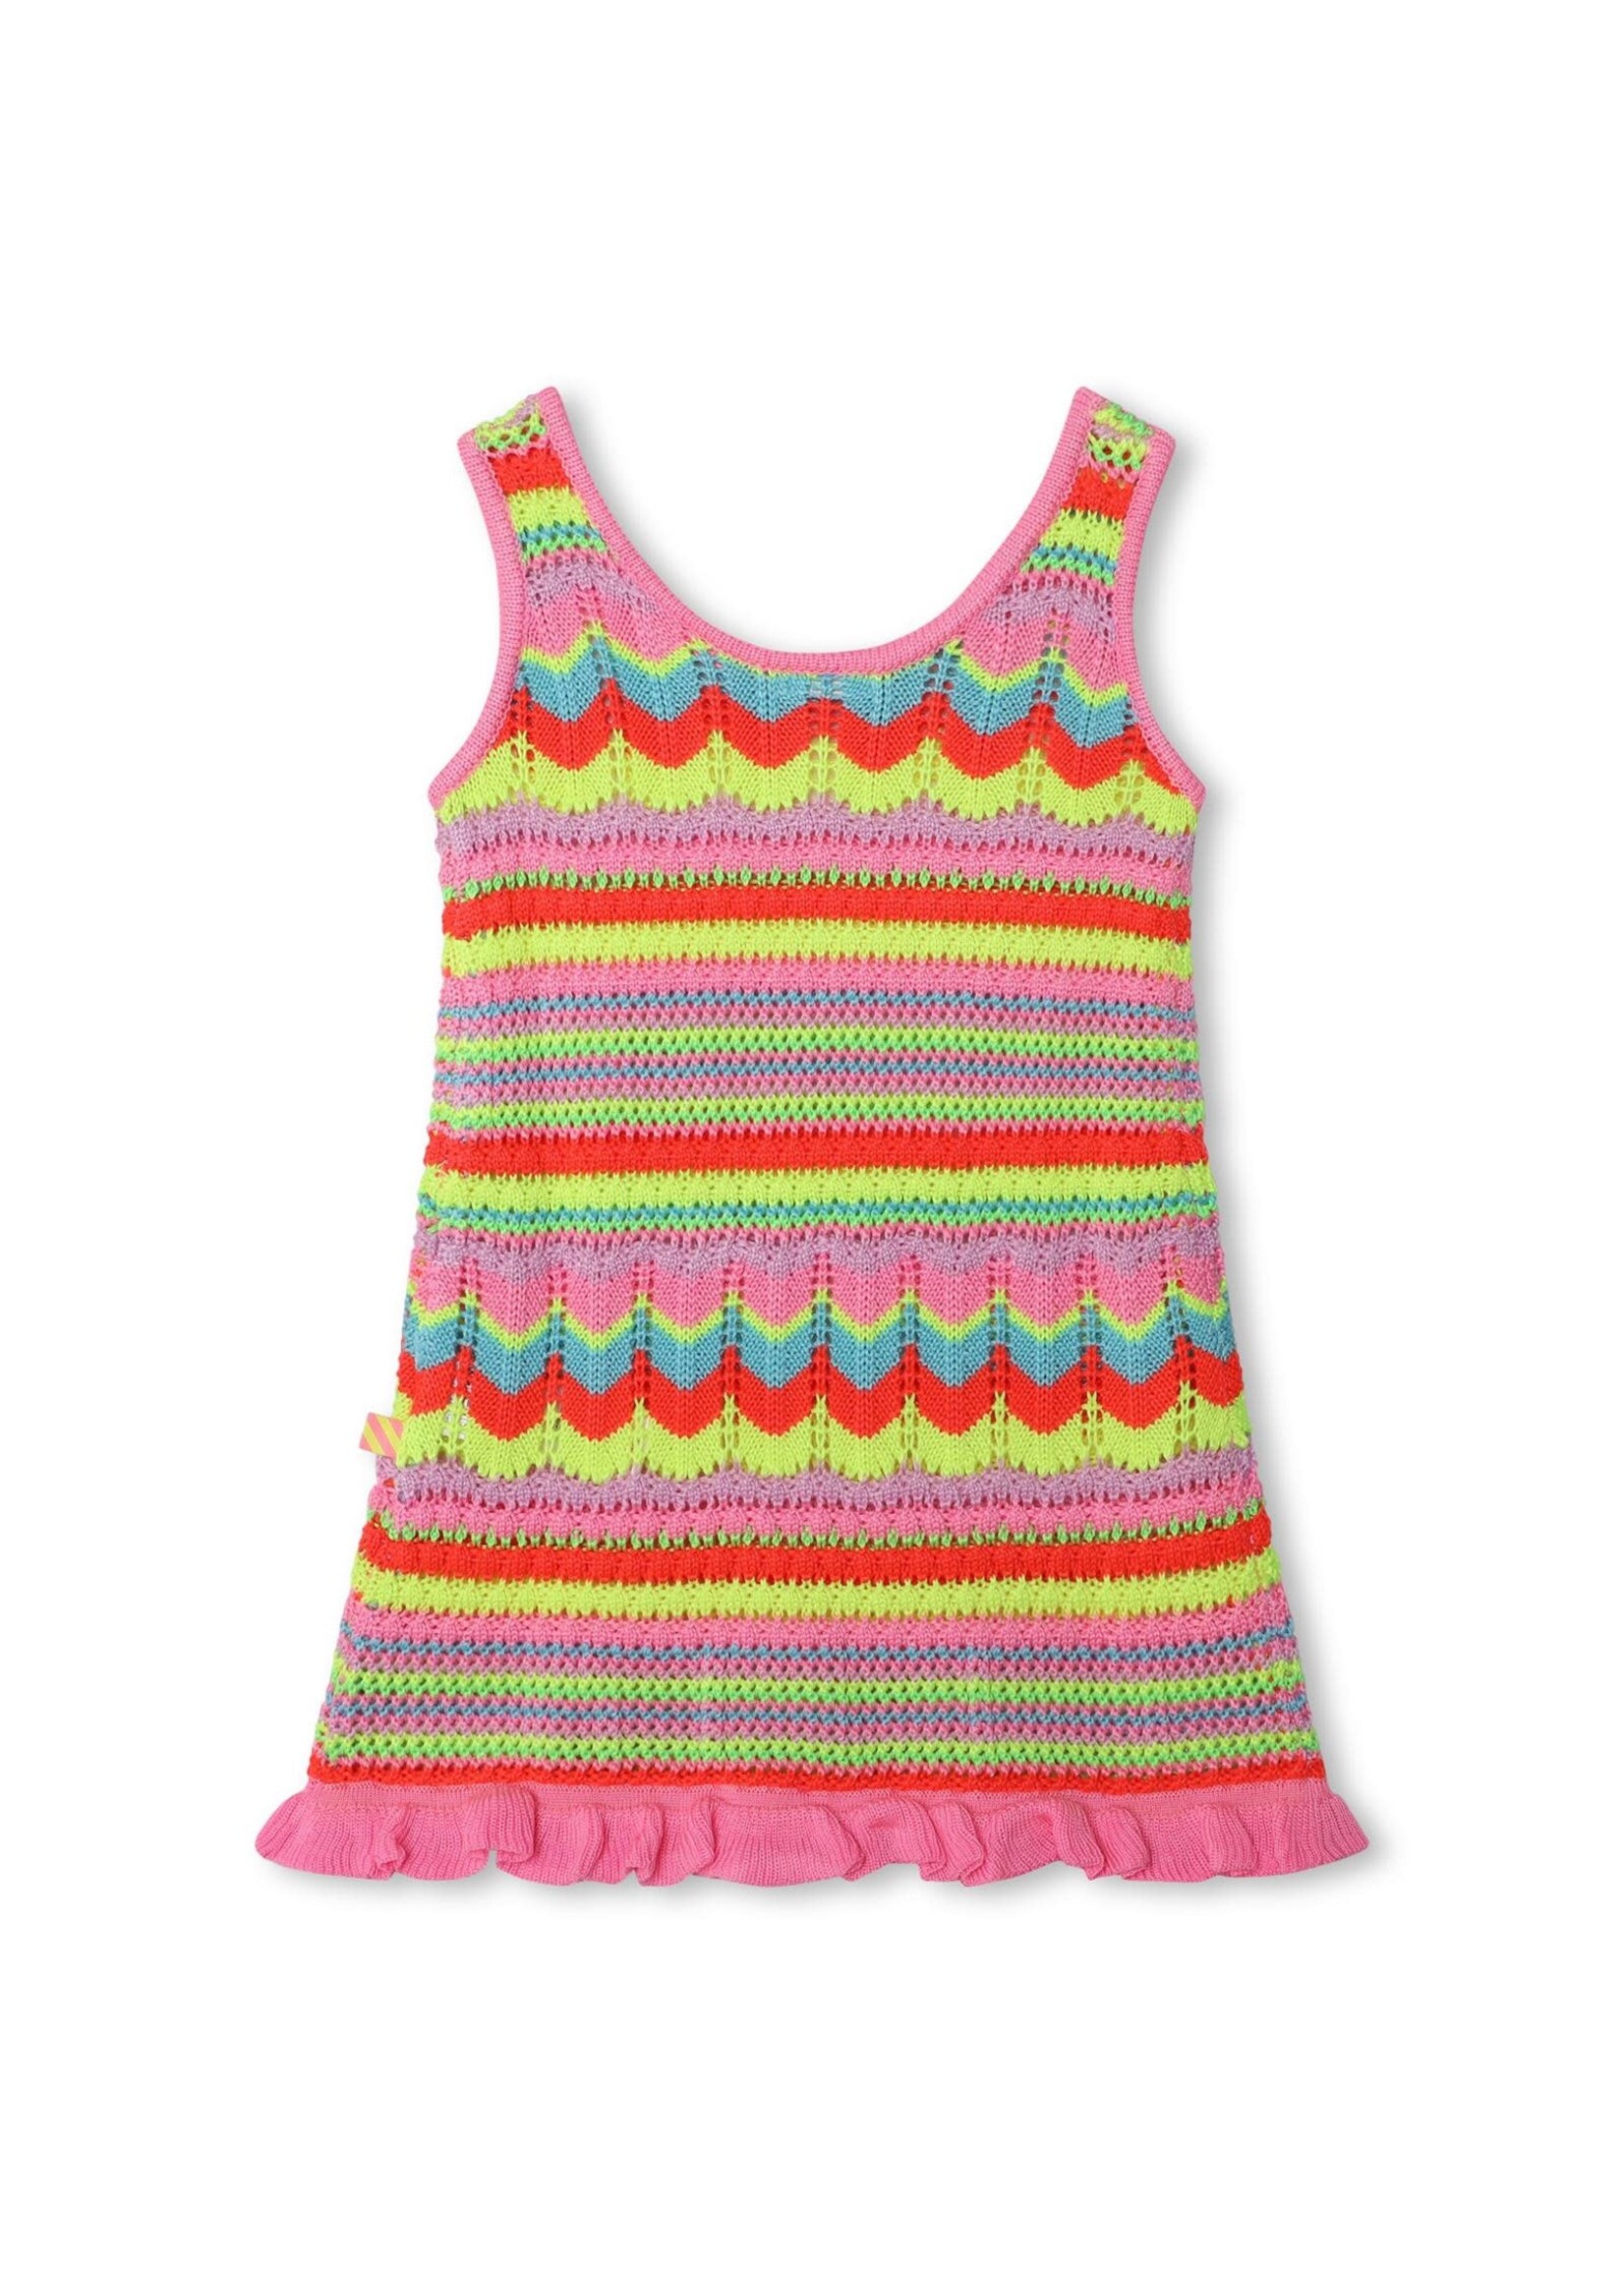 Billie Blush Dress Knitted Rainbow - Billie Blush